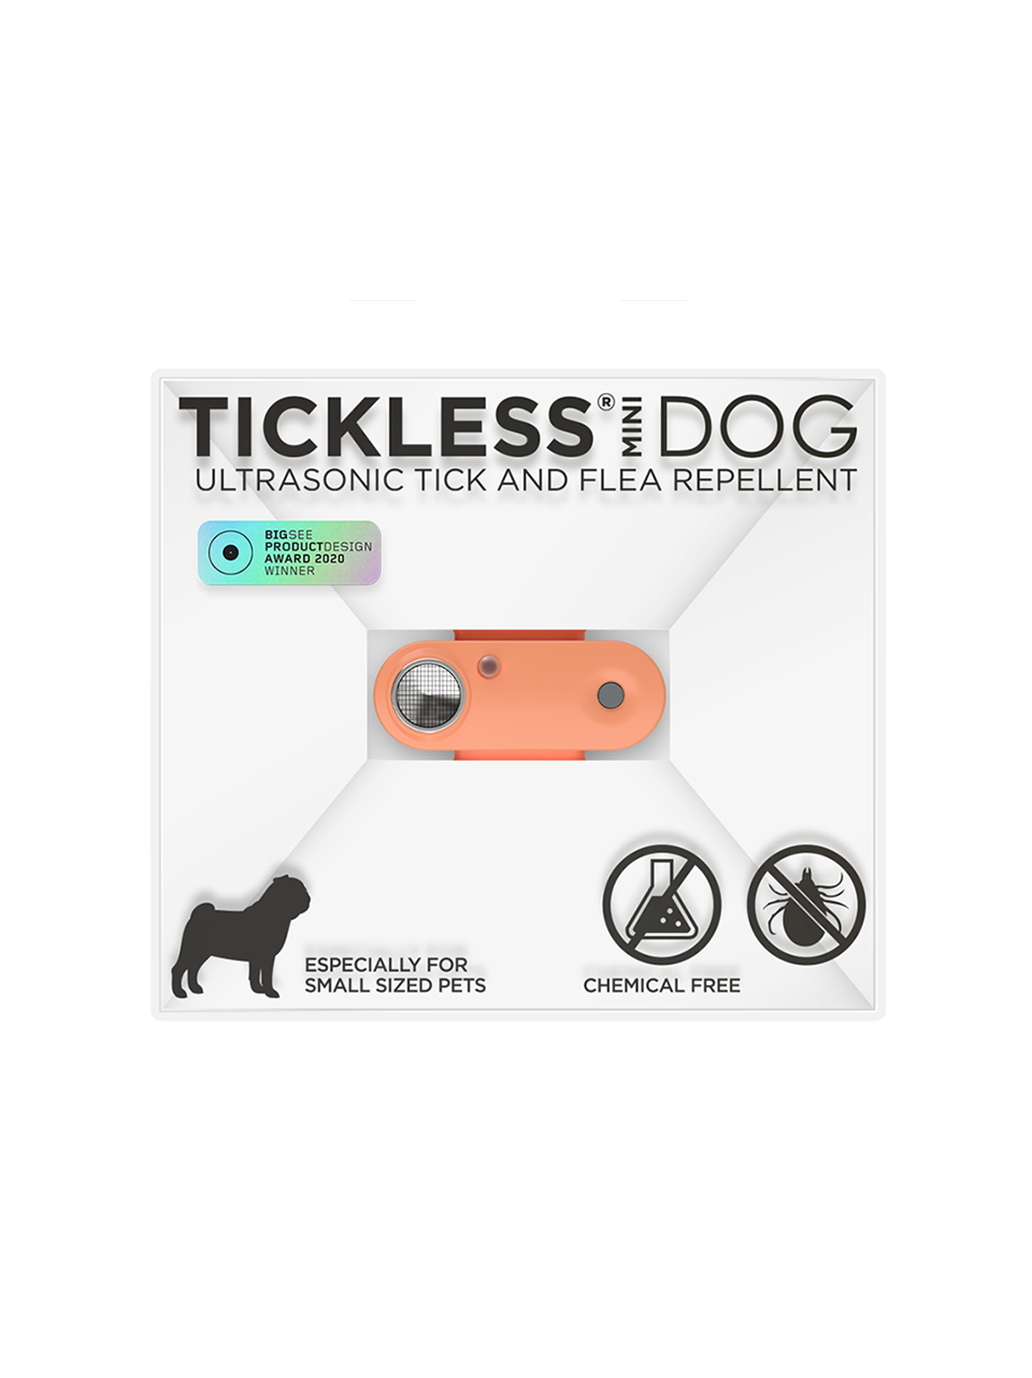 Dispositivo de ultrasonido antigarrapatas Tickless Pet